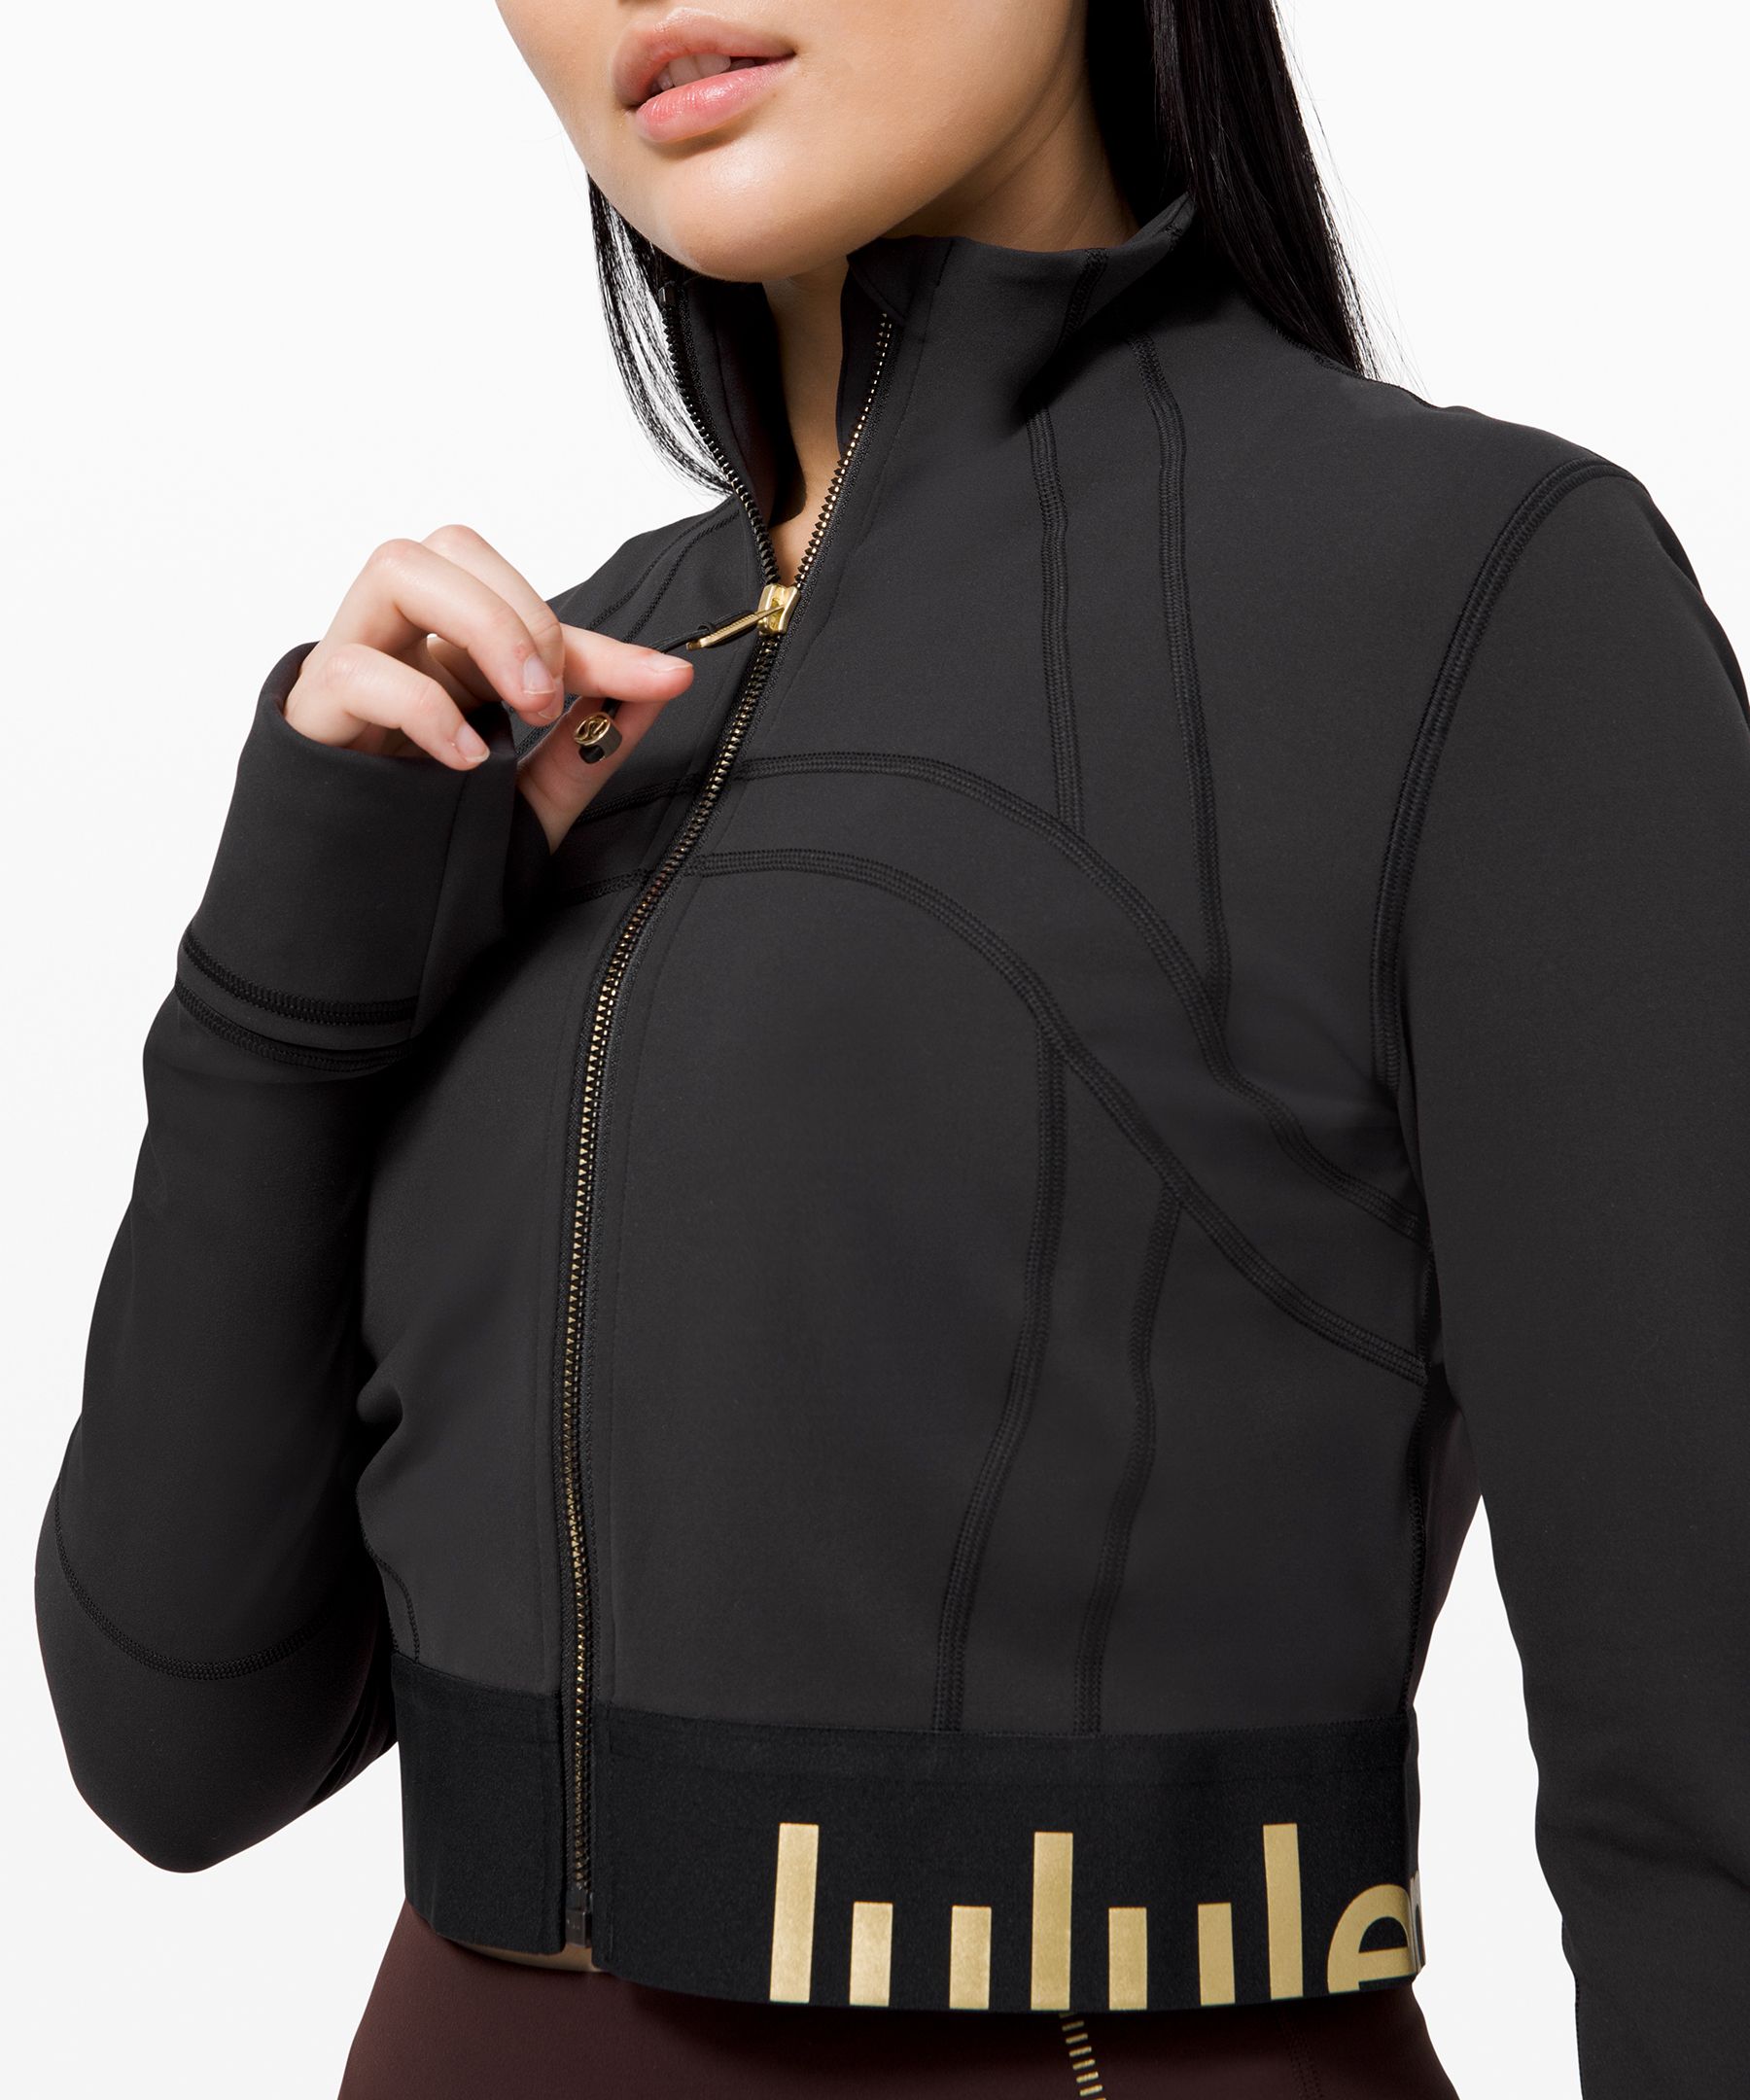 Why Lululemon's Define Jacket Is Going Viral On TikTok